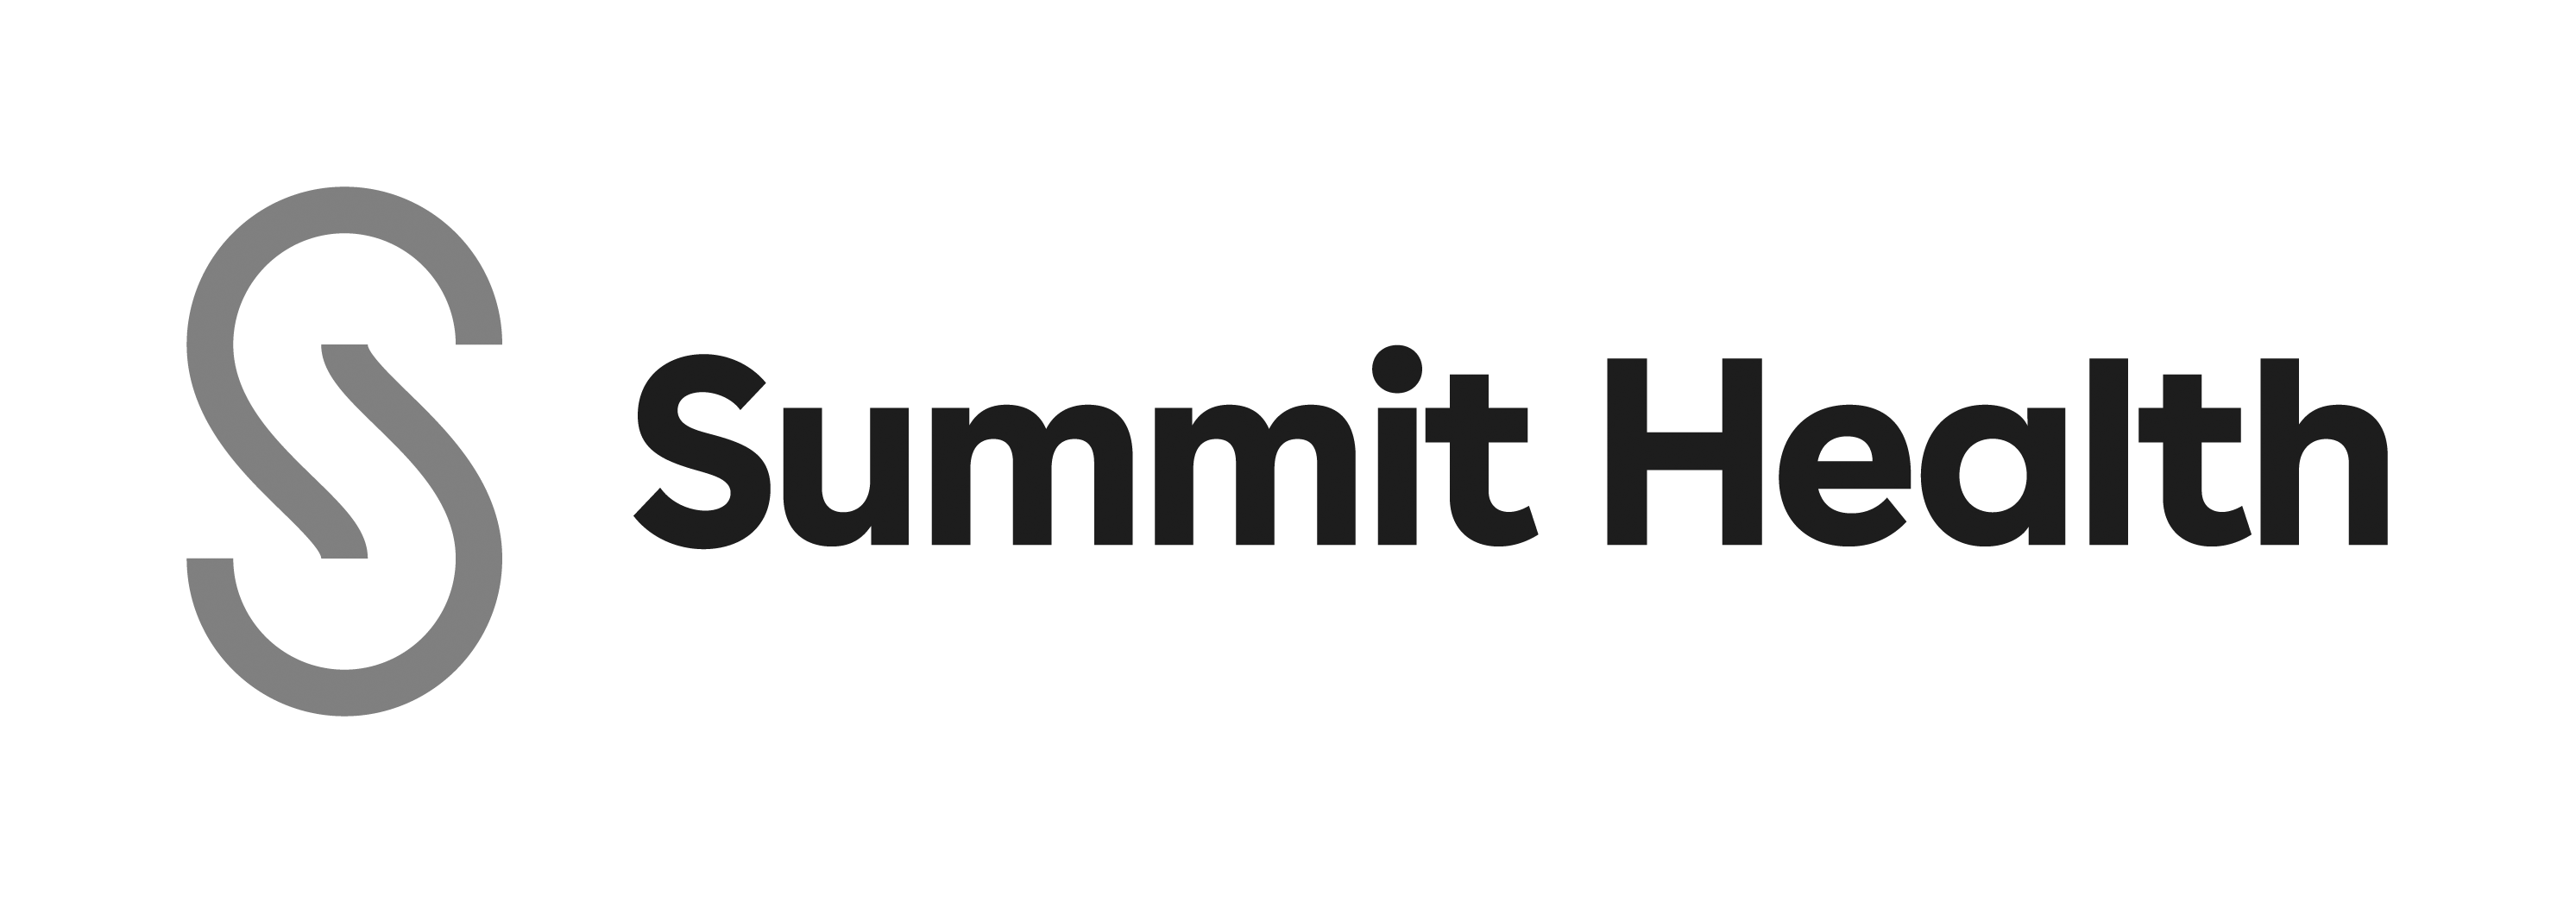 Summit_Health_grayscale